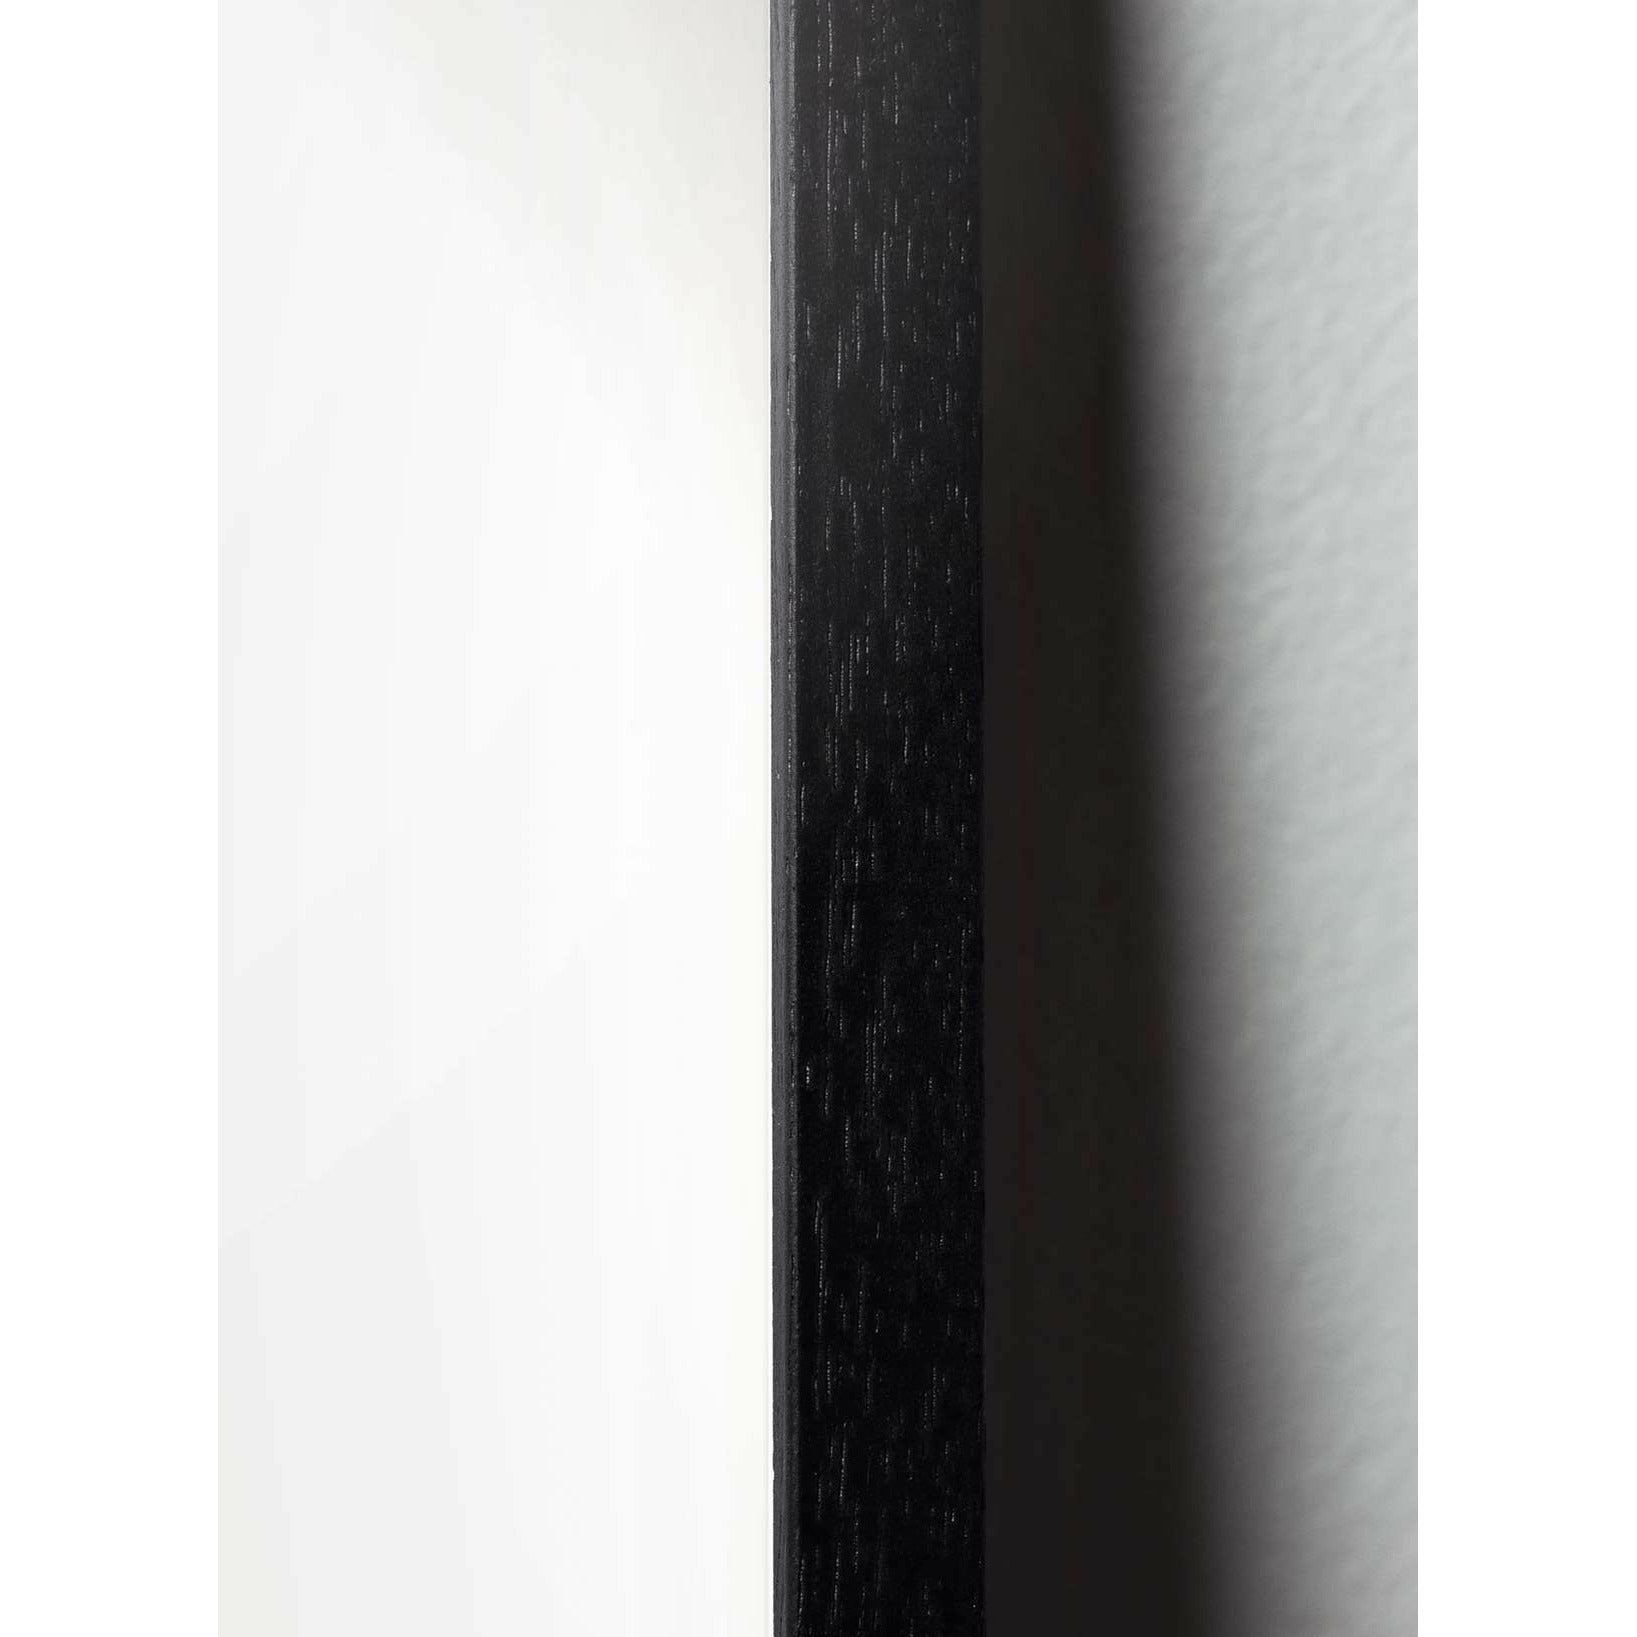 Brainchild Egg Line Poster, Frame In Black Lacquered Wood 50x70 Cm, White Background